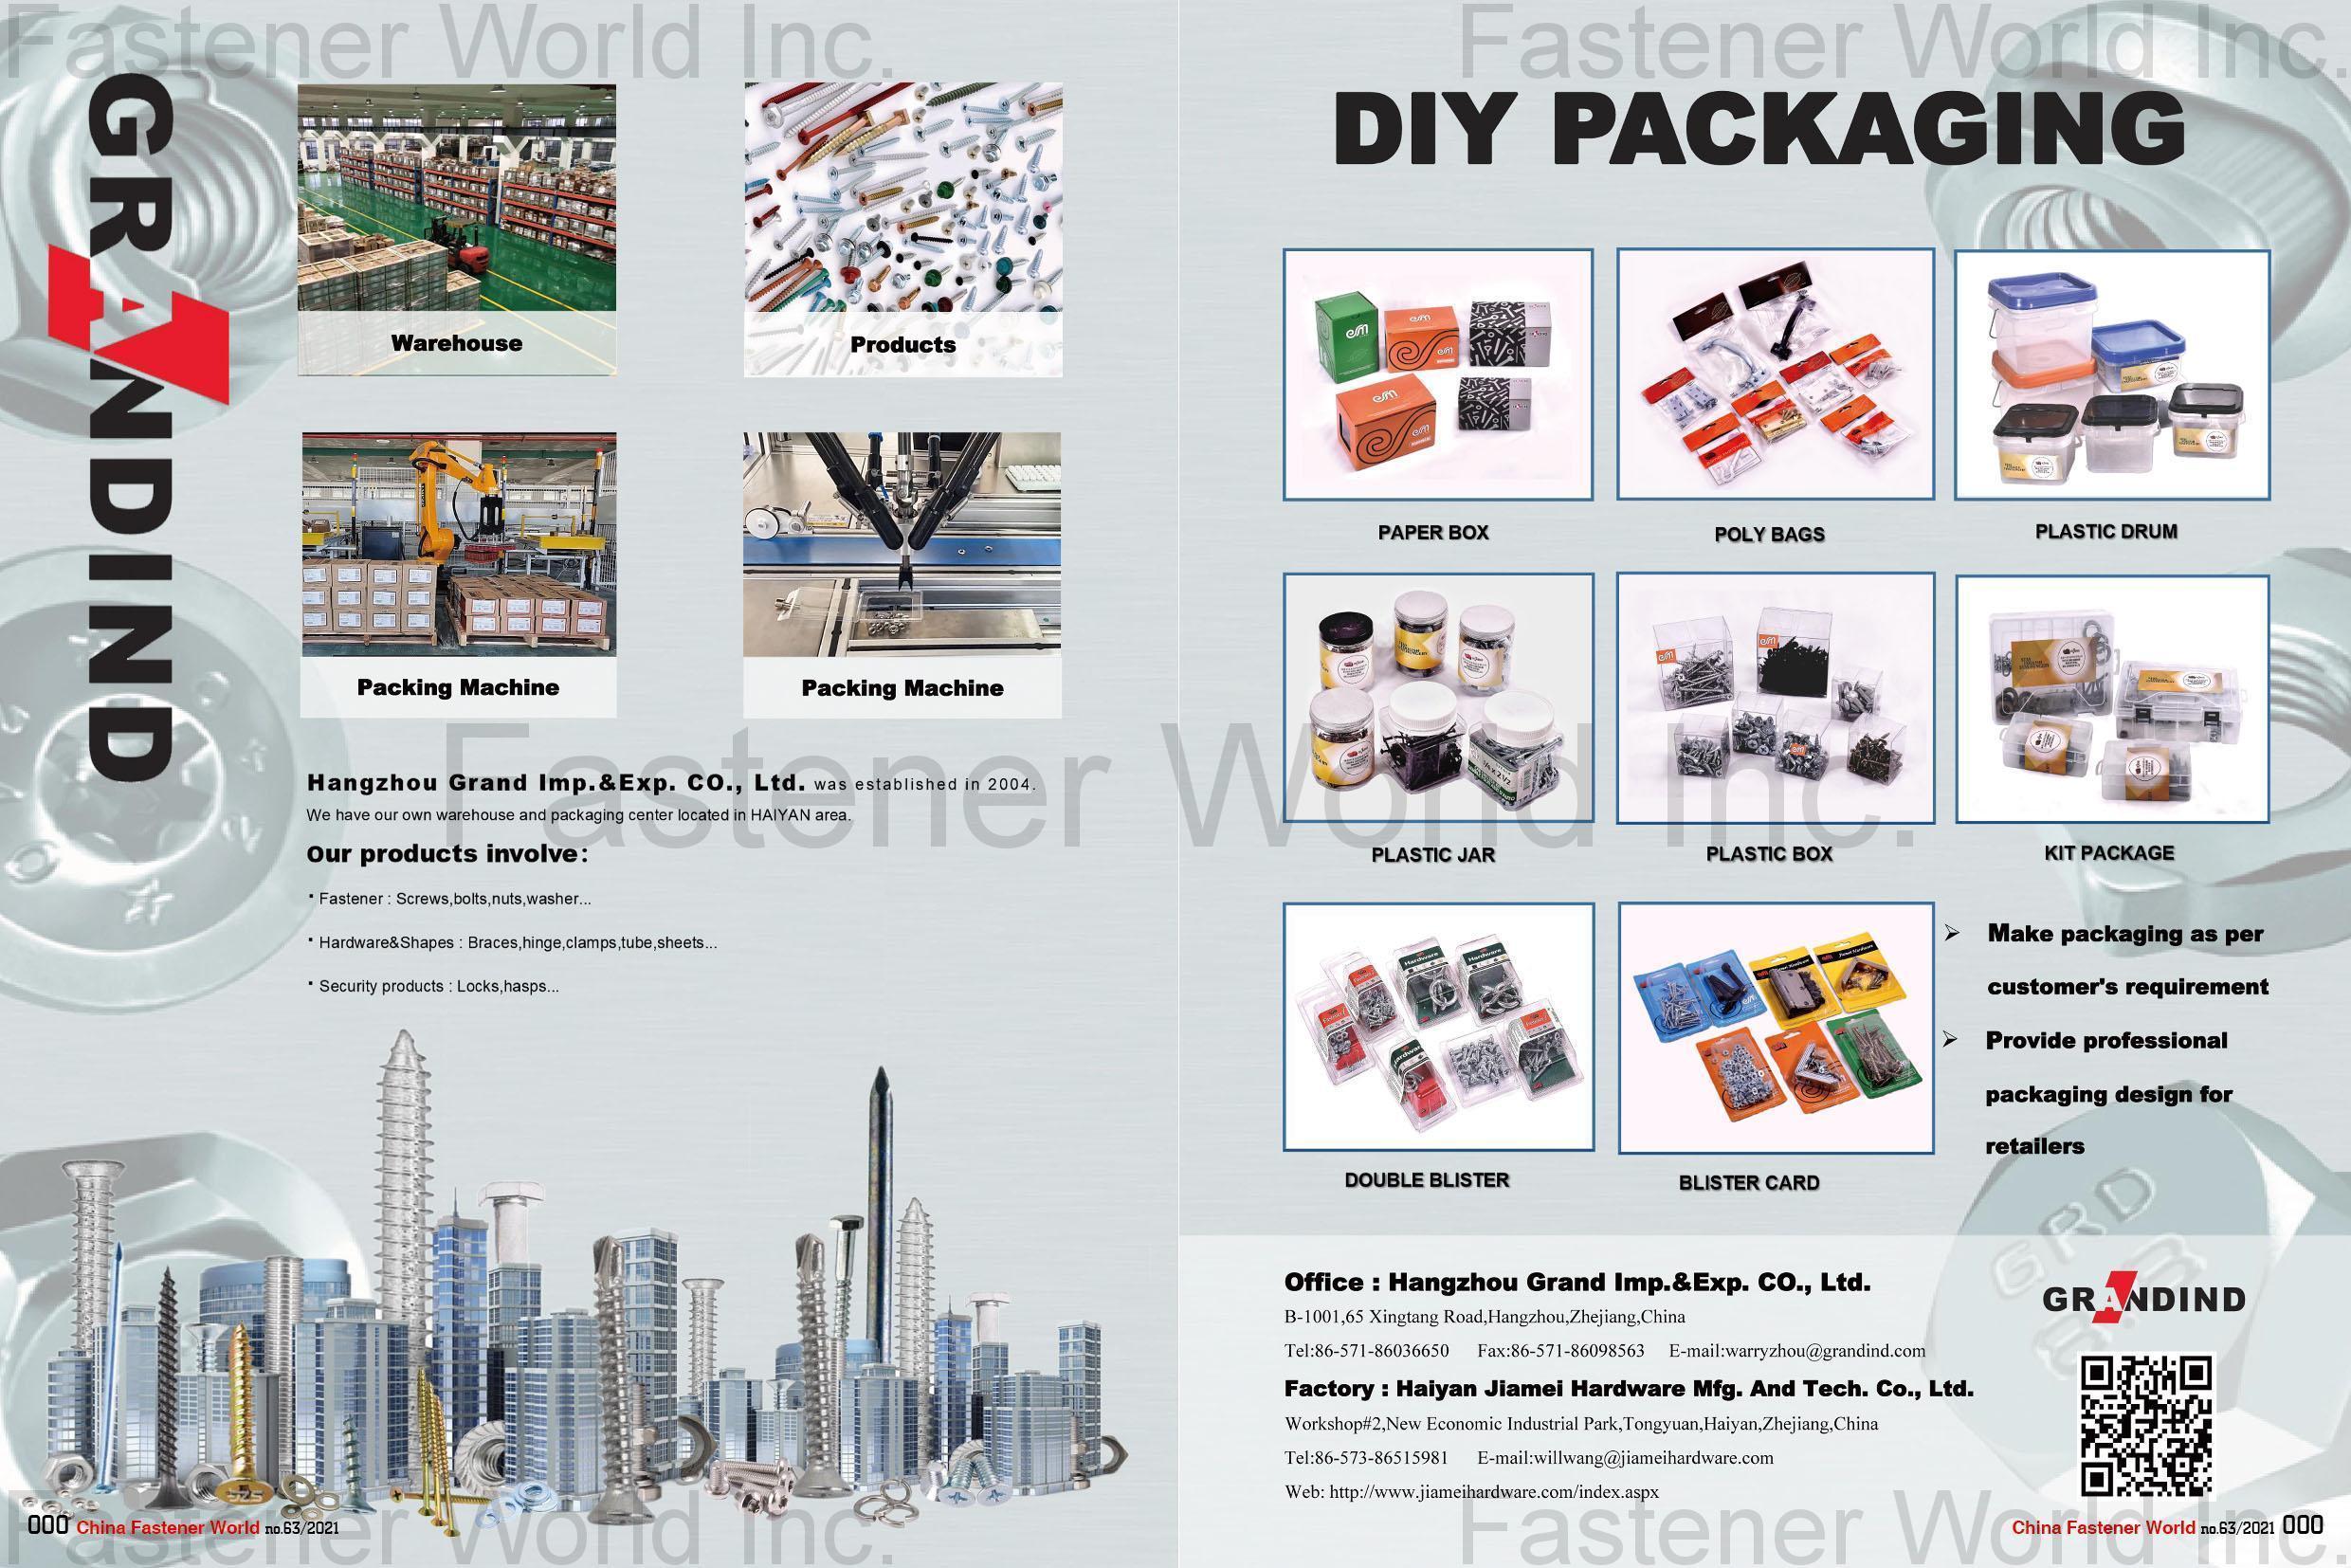 Hangzhou Grand Imp.& Exp. Co., Ltd. (Haiyan Jiamei Hardware) , Screws, Bolts, Nuts, Washer, Braces, Hinge, Clamps, Tube, Sheets, Locks, Hasps, Paper Box, Poly Bags, Plastic Drum, Plastic Jar, Plastic Box, Kit Package, Double Blister, Blister Card